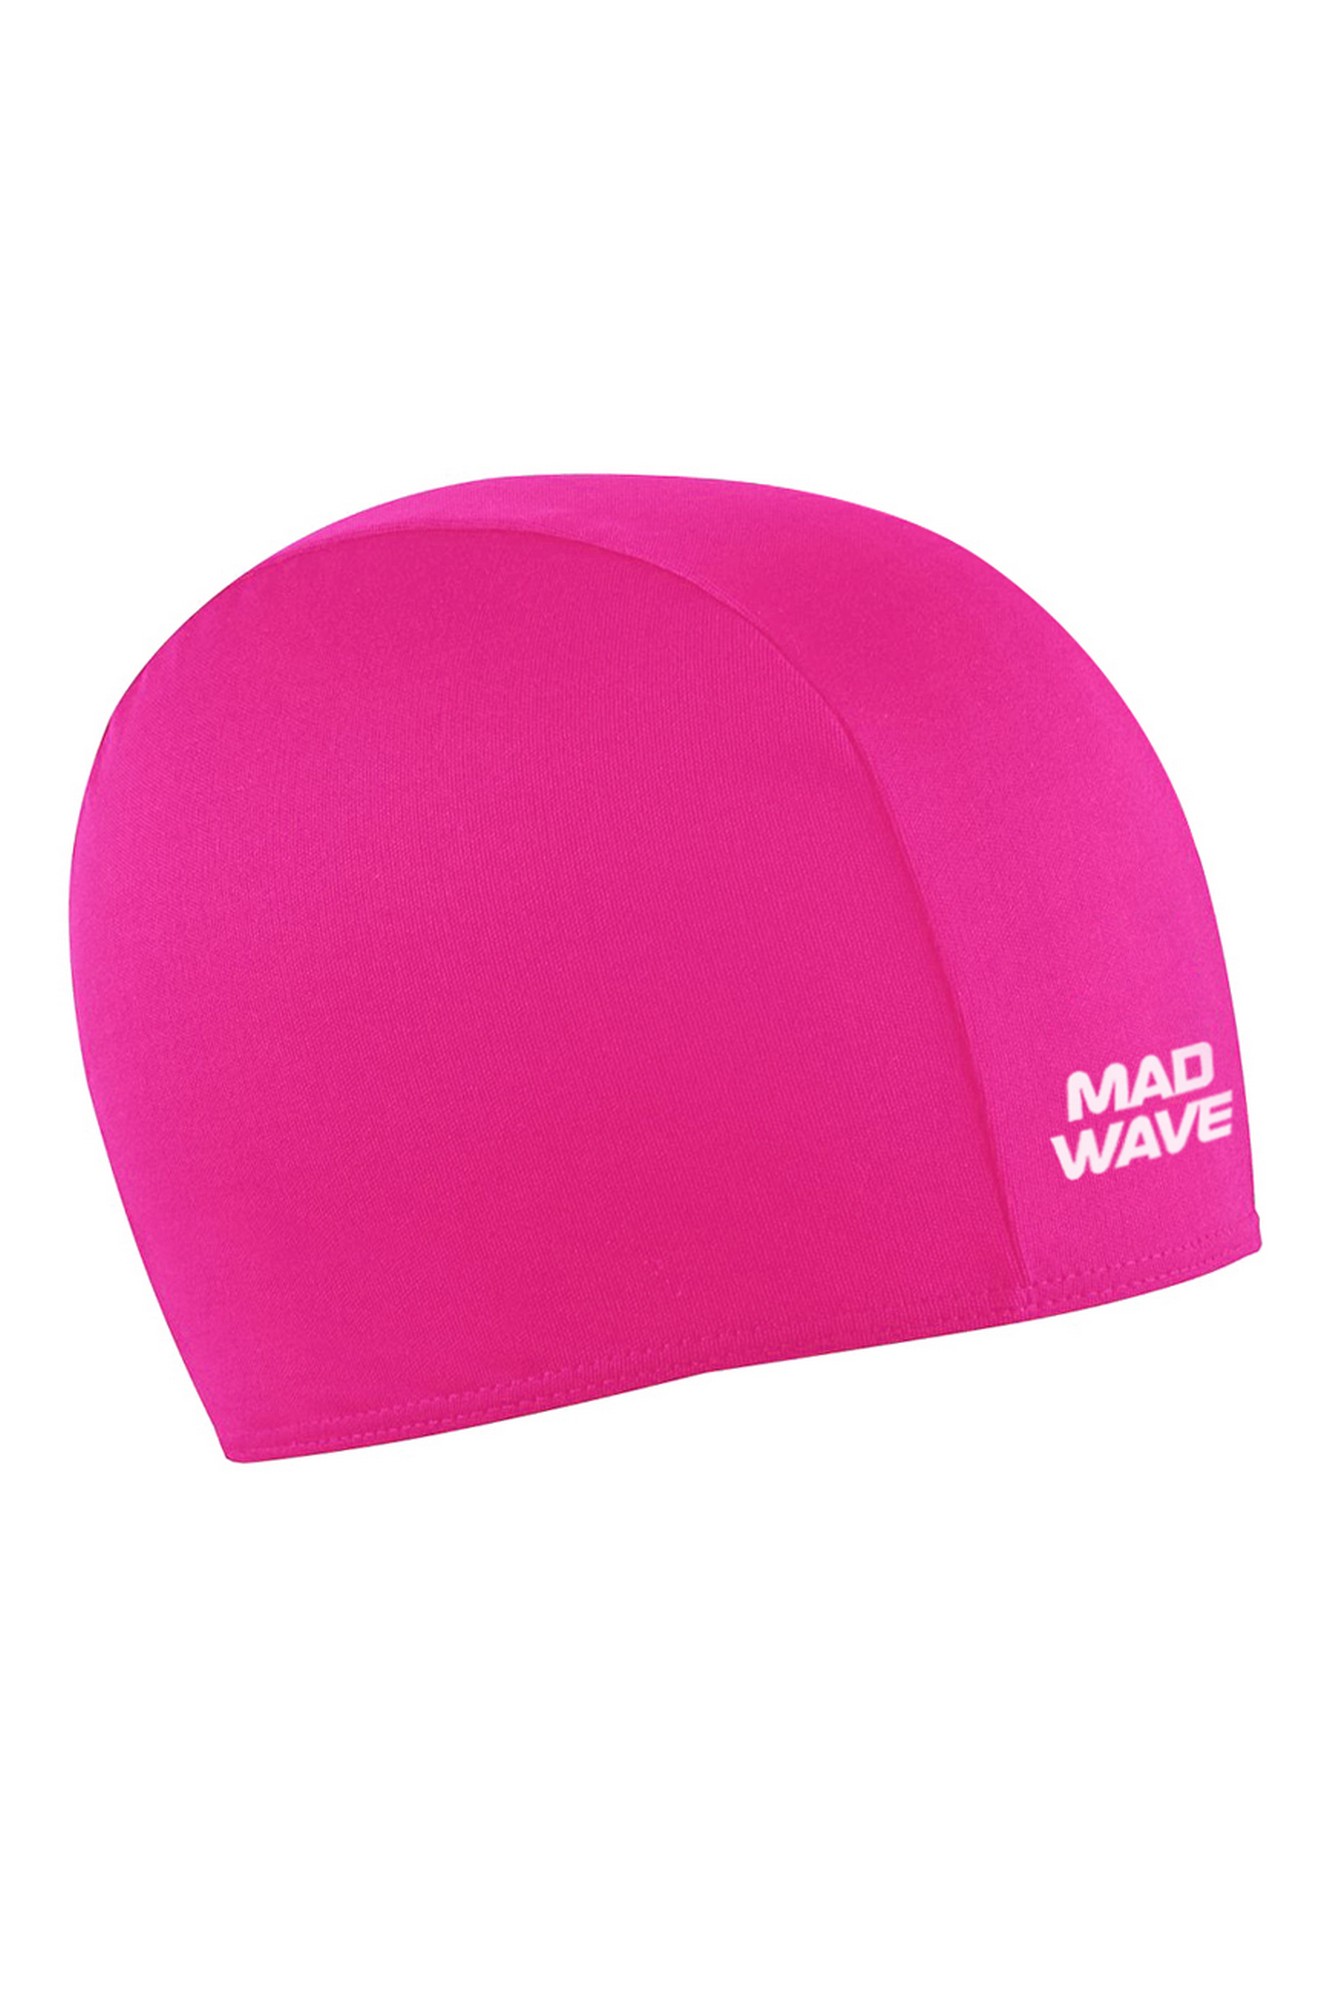   Mad Wave POLY II M0521 03 0 11W 